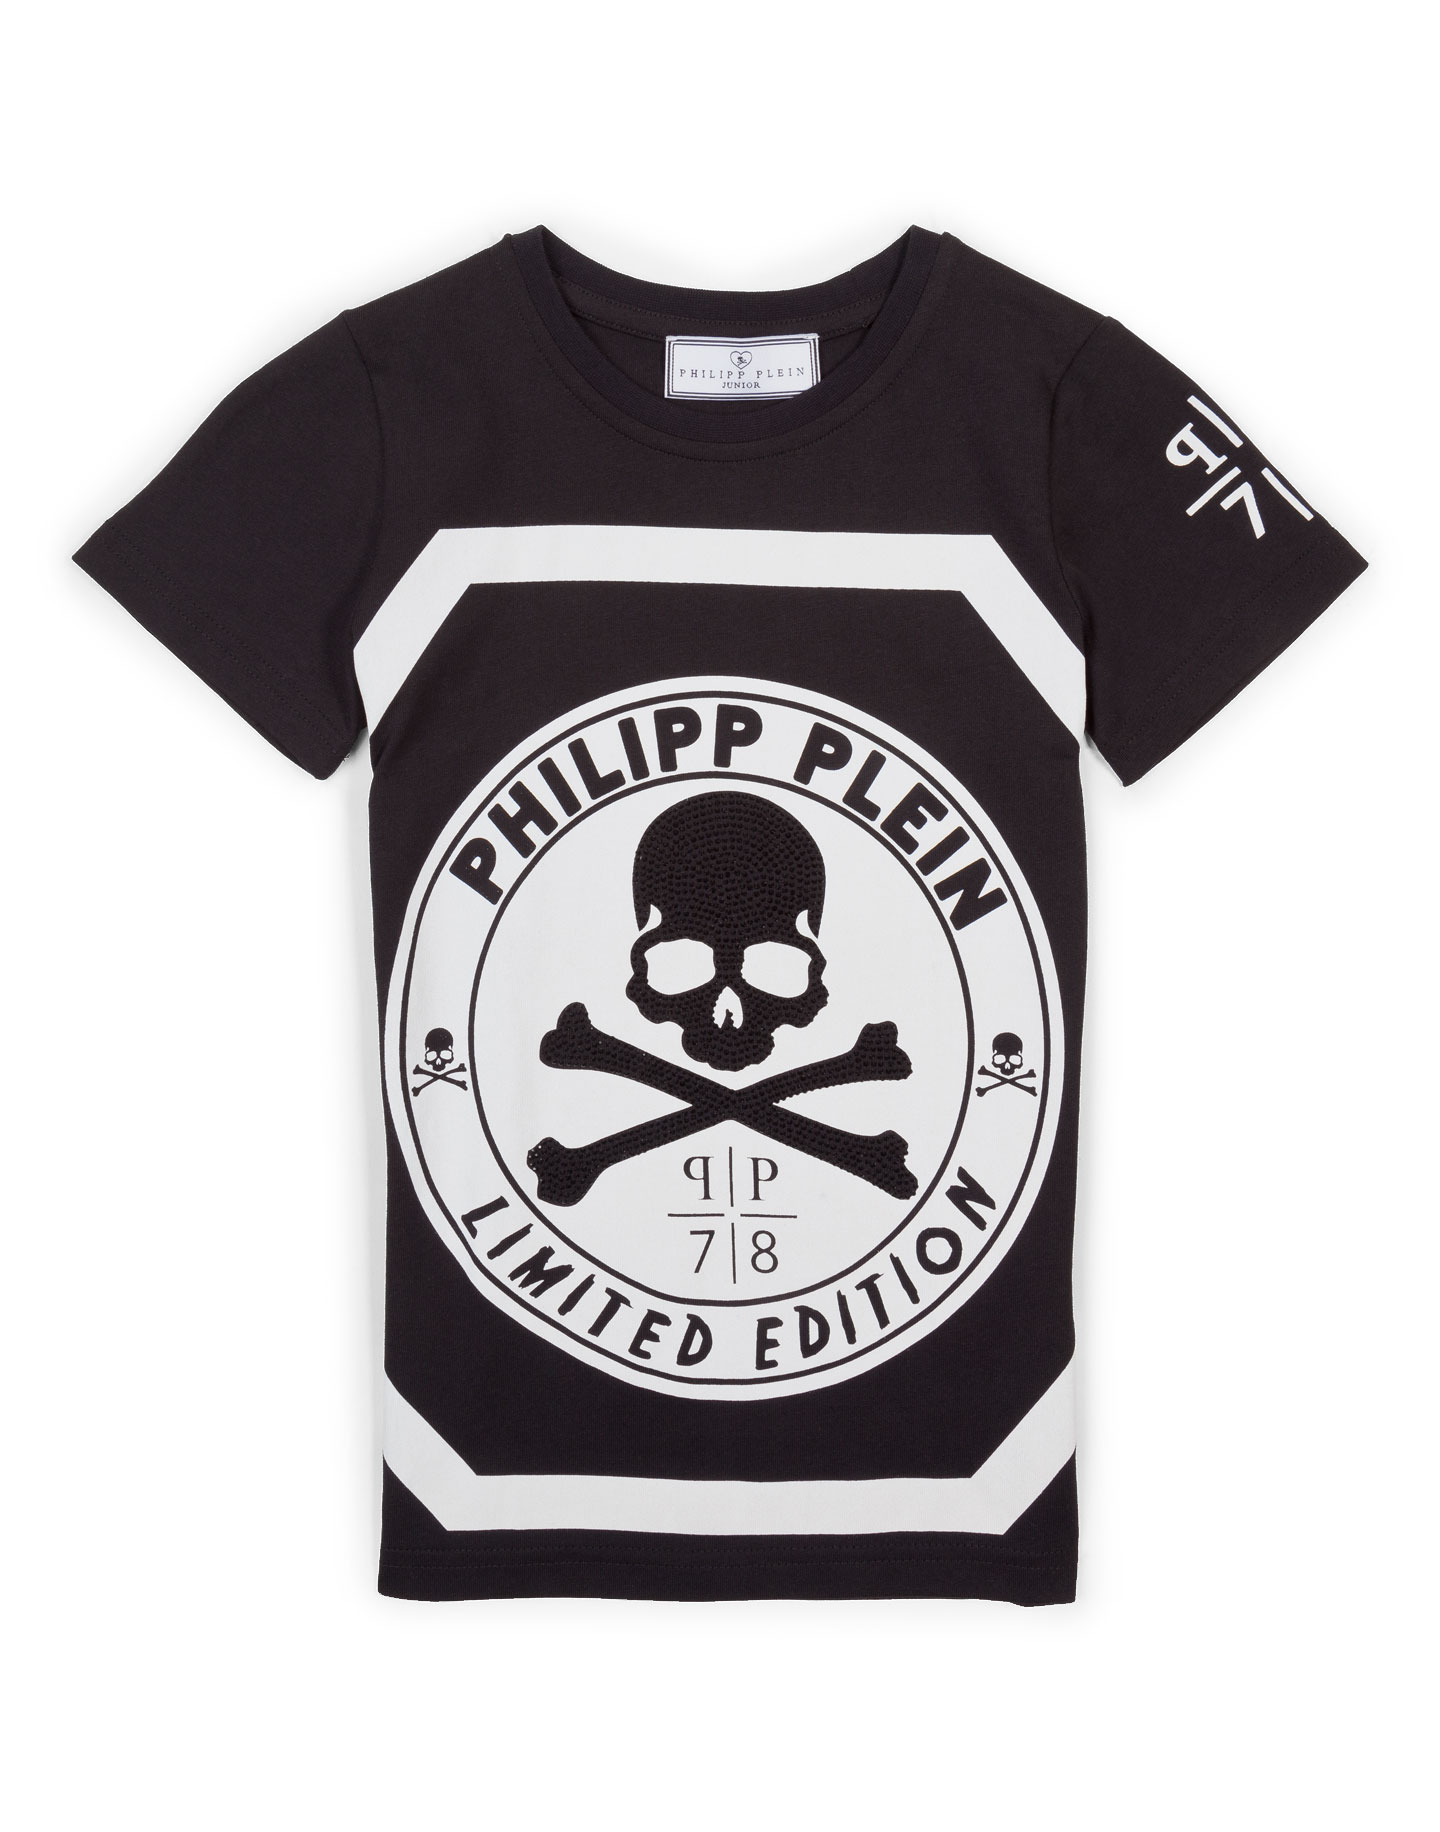 philipp plein limited edition shirt